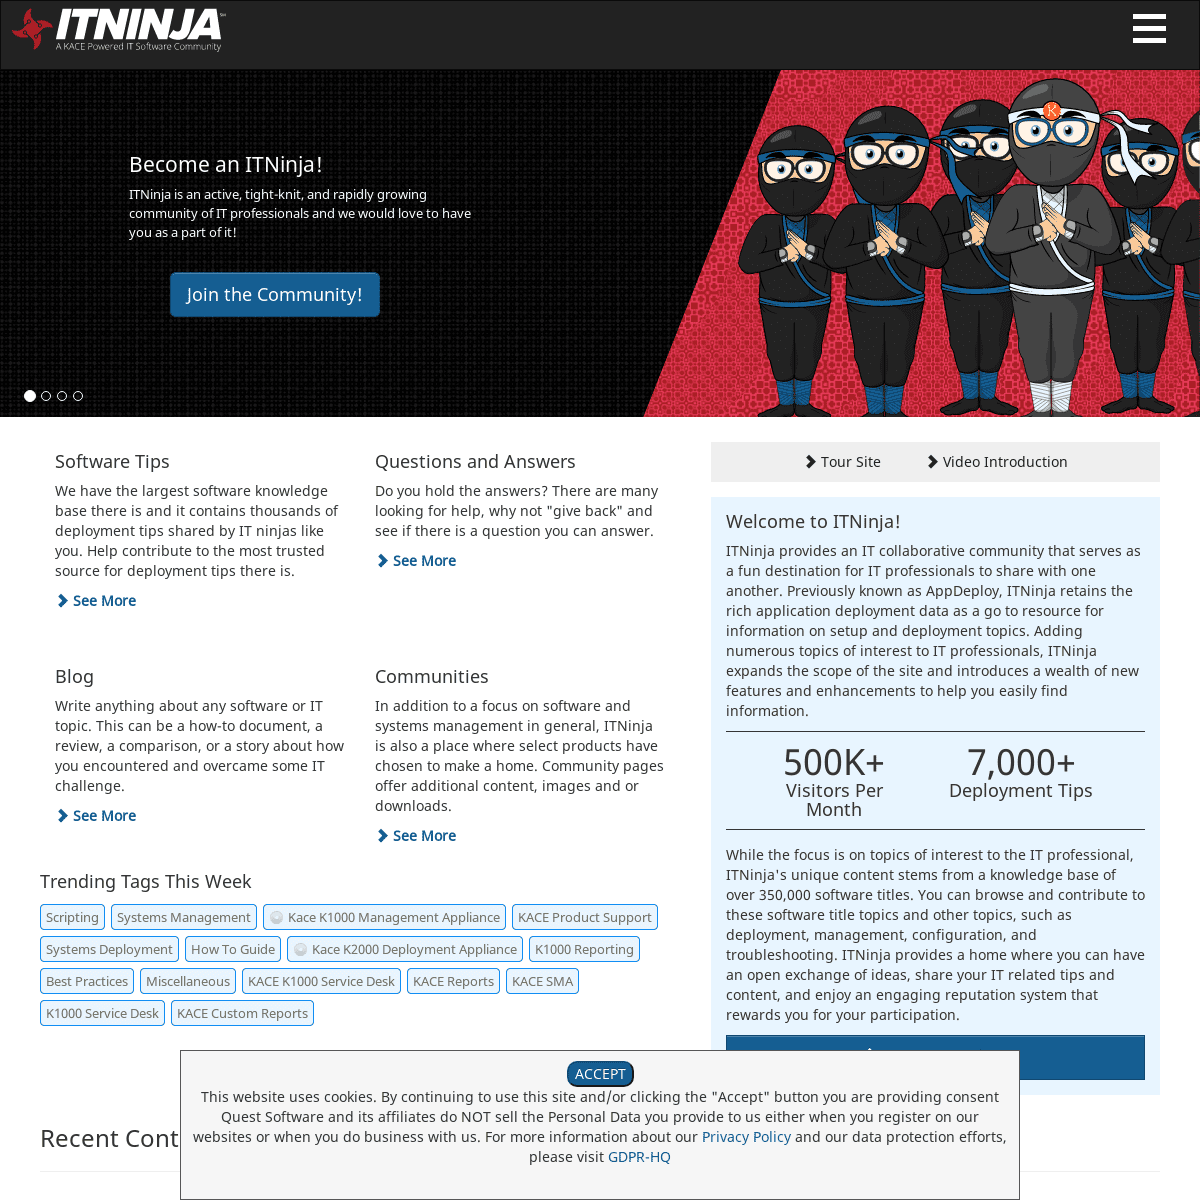 A complete backup of itninja.com